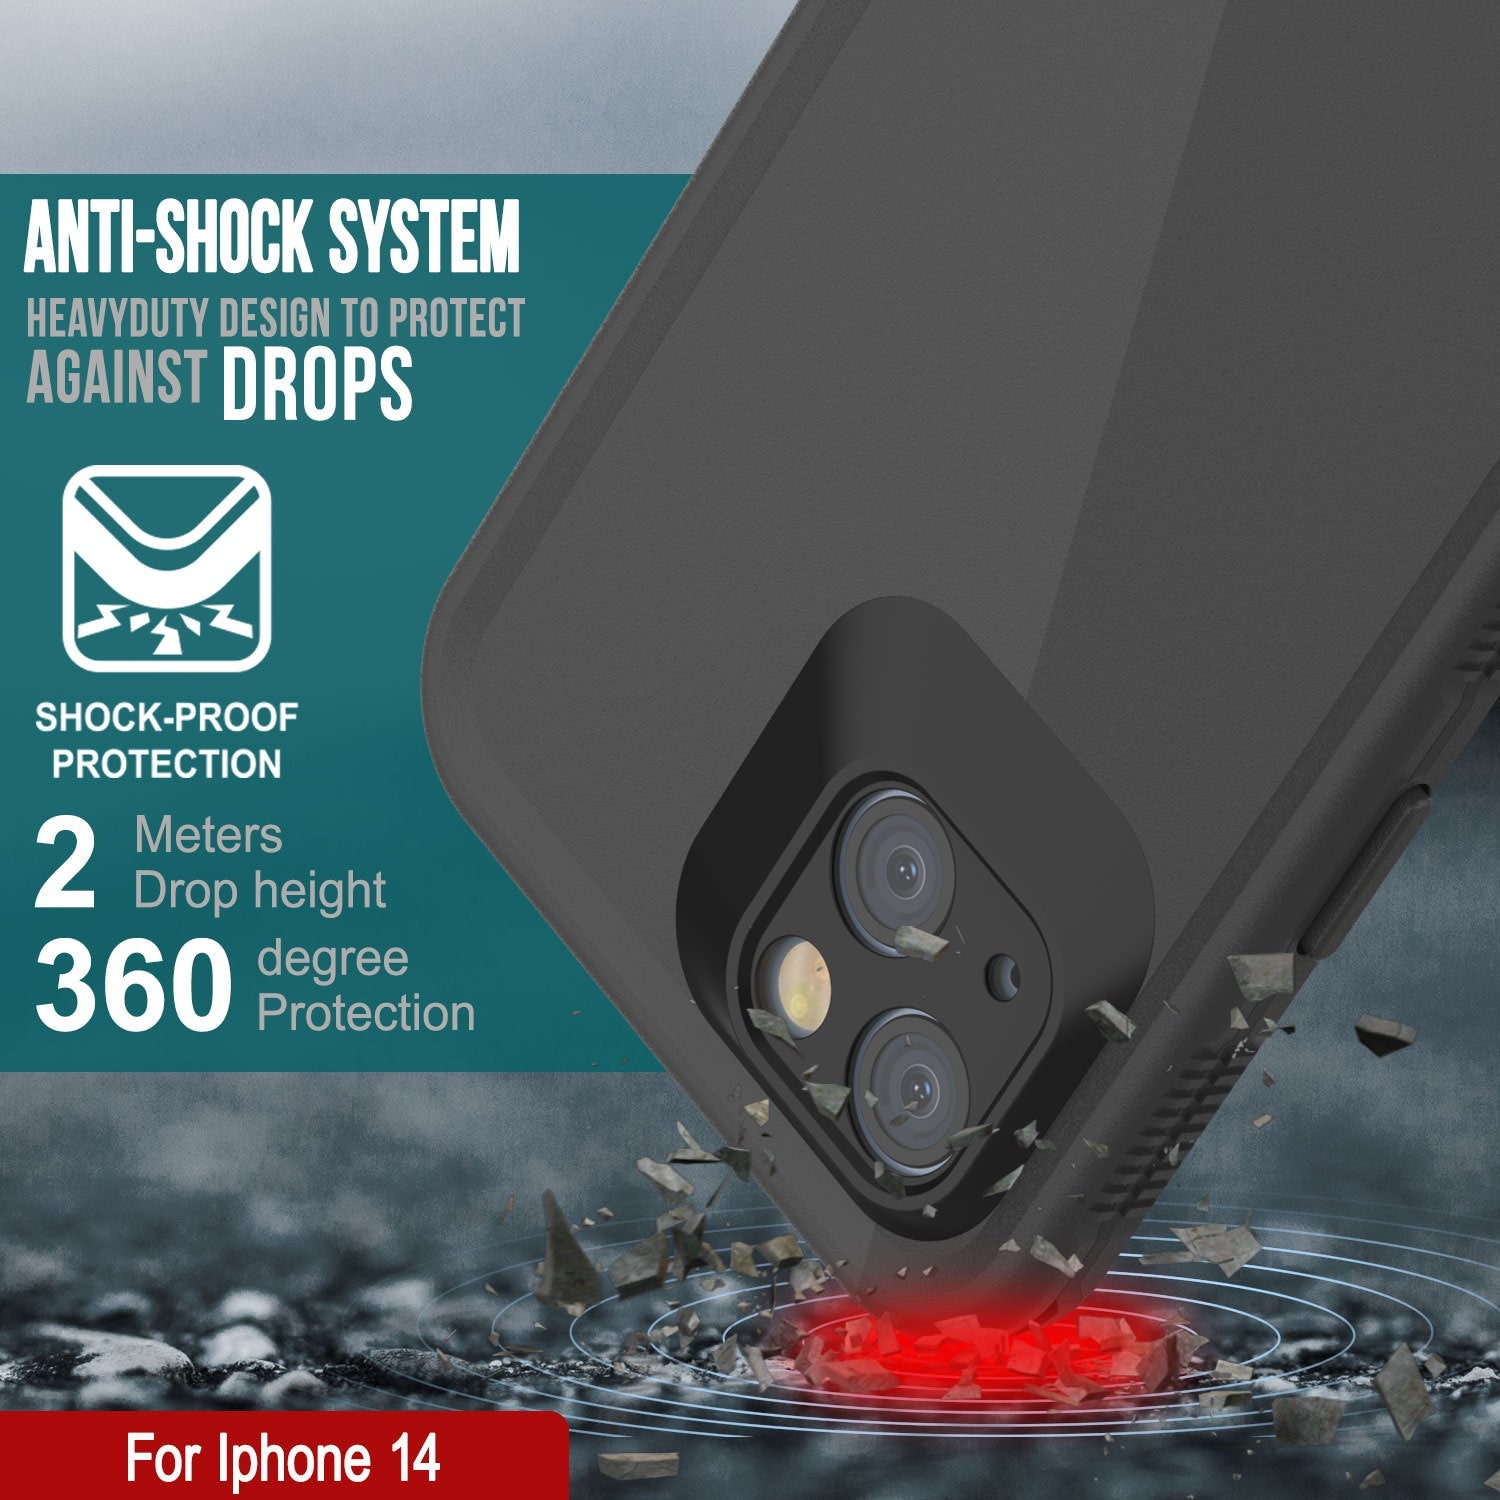 Punkcase iPhone 14 Waterproof Case [Aqua Series] Armor Cover [Black]